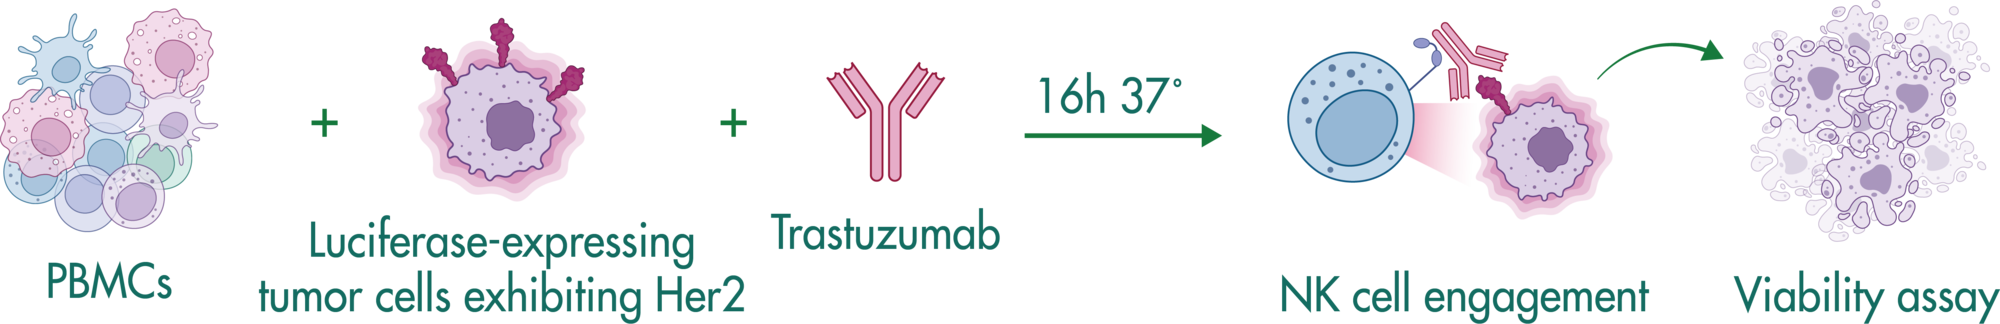 Adcc assay example trastuzumab